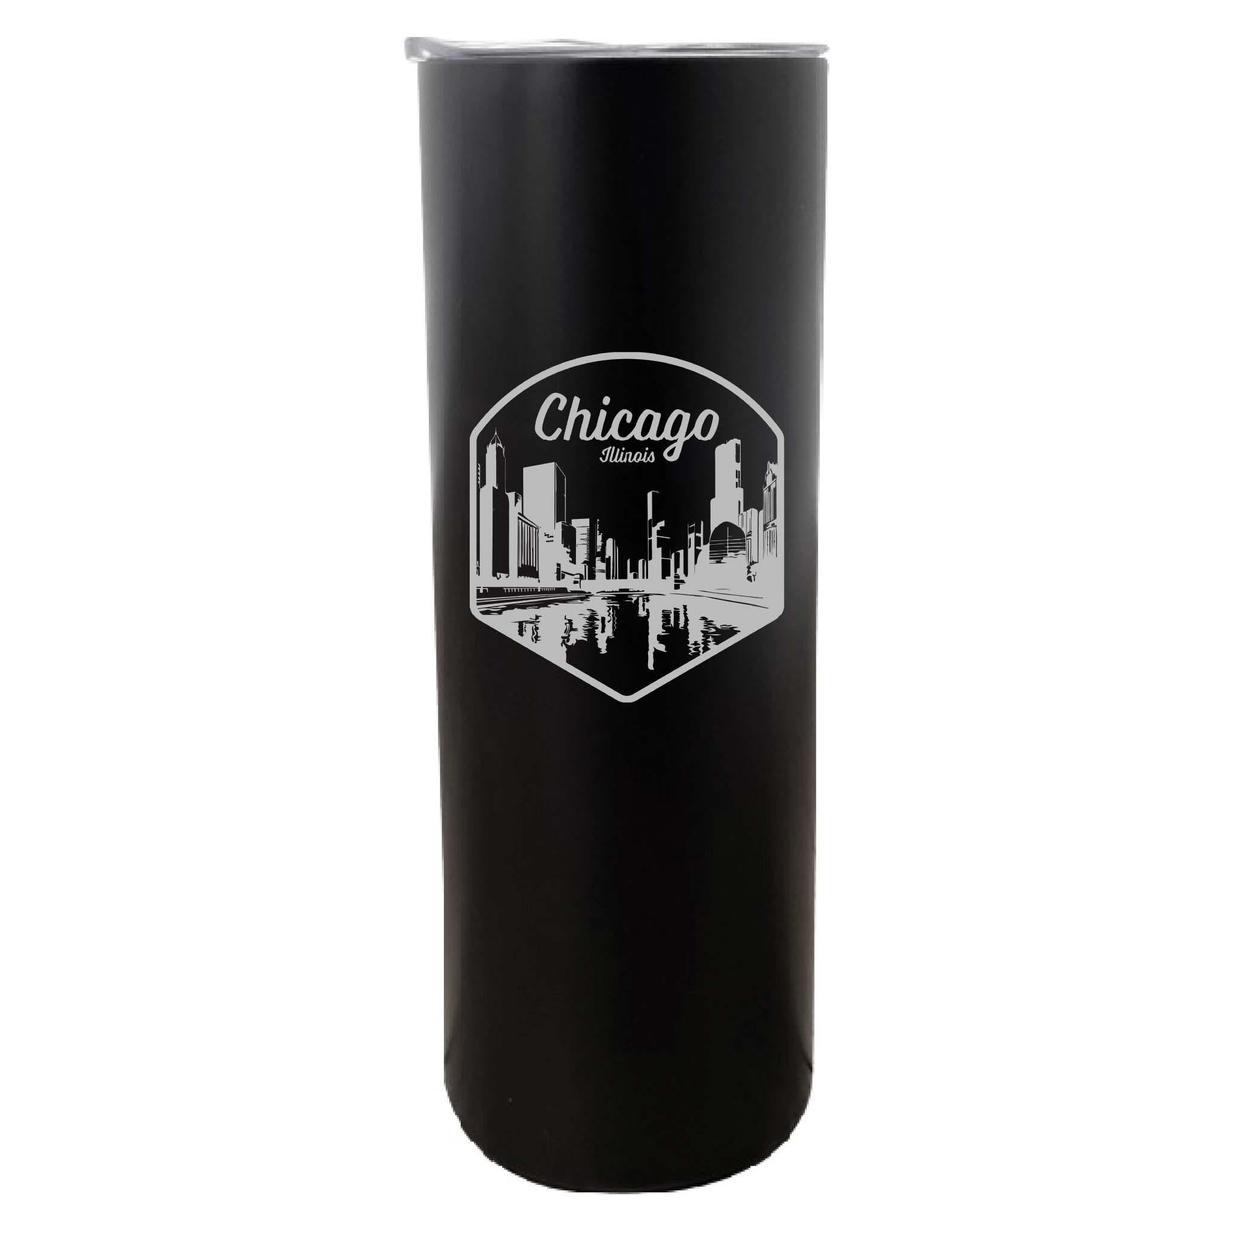 Chicago Illinois Souvenir 20 Oz Engraved Insulated Skinny Tumbler - Gray Glitter,,4-Pack